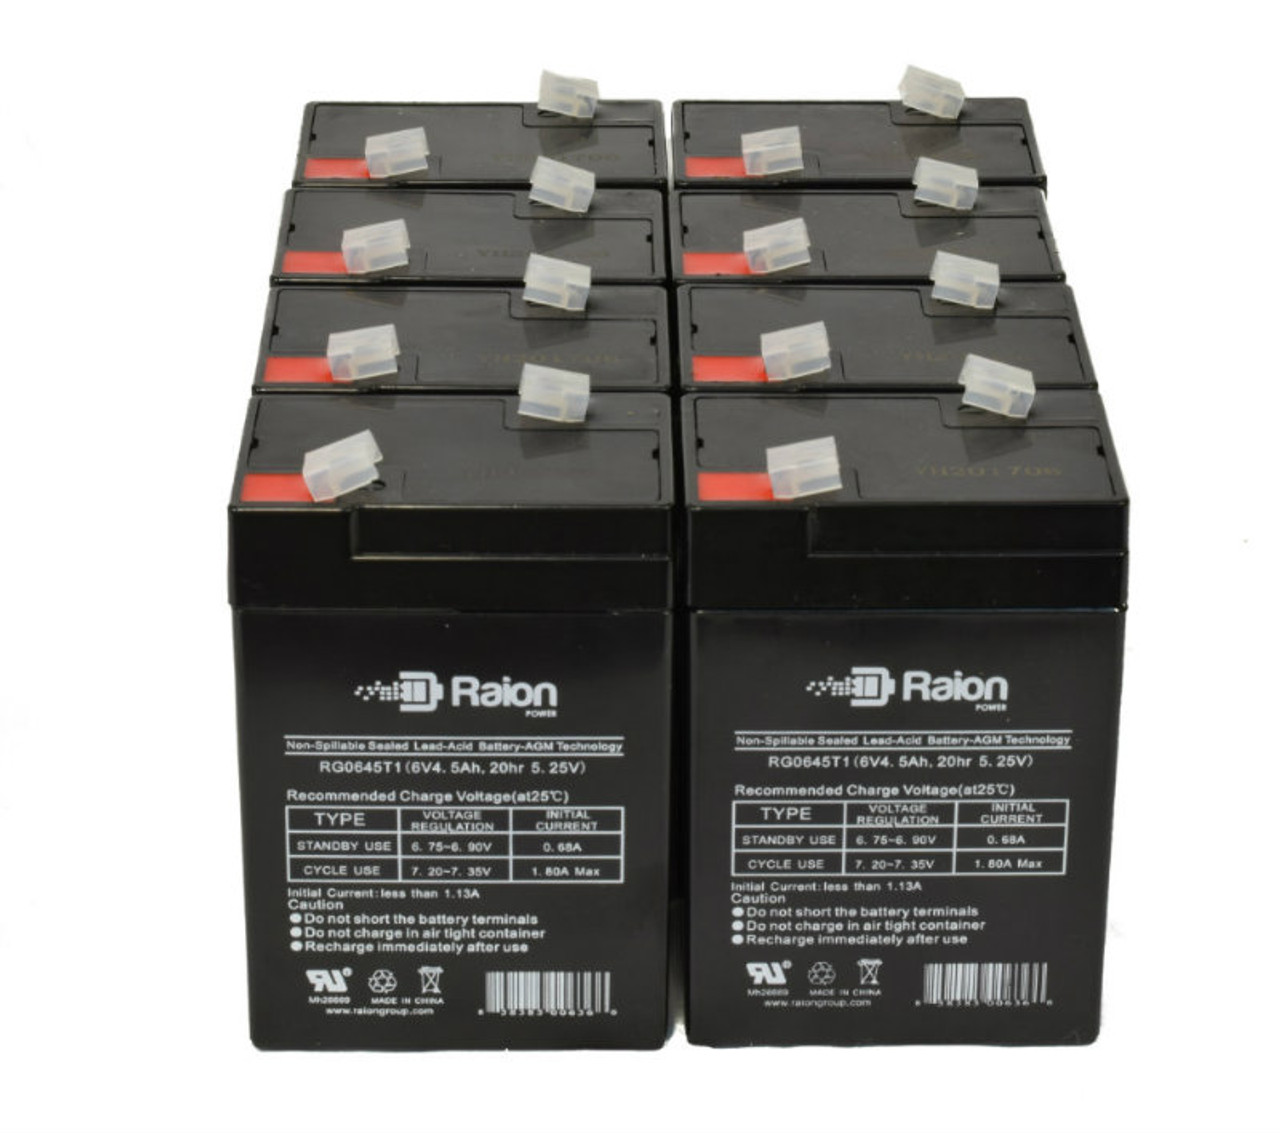 Raion Power 6 Volt 4.5Ah RG0645T1 Replacement Battery for Haze HZS6-4.5 - 8 Pack